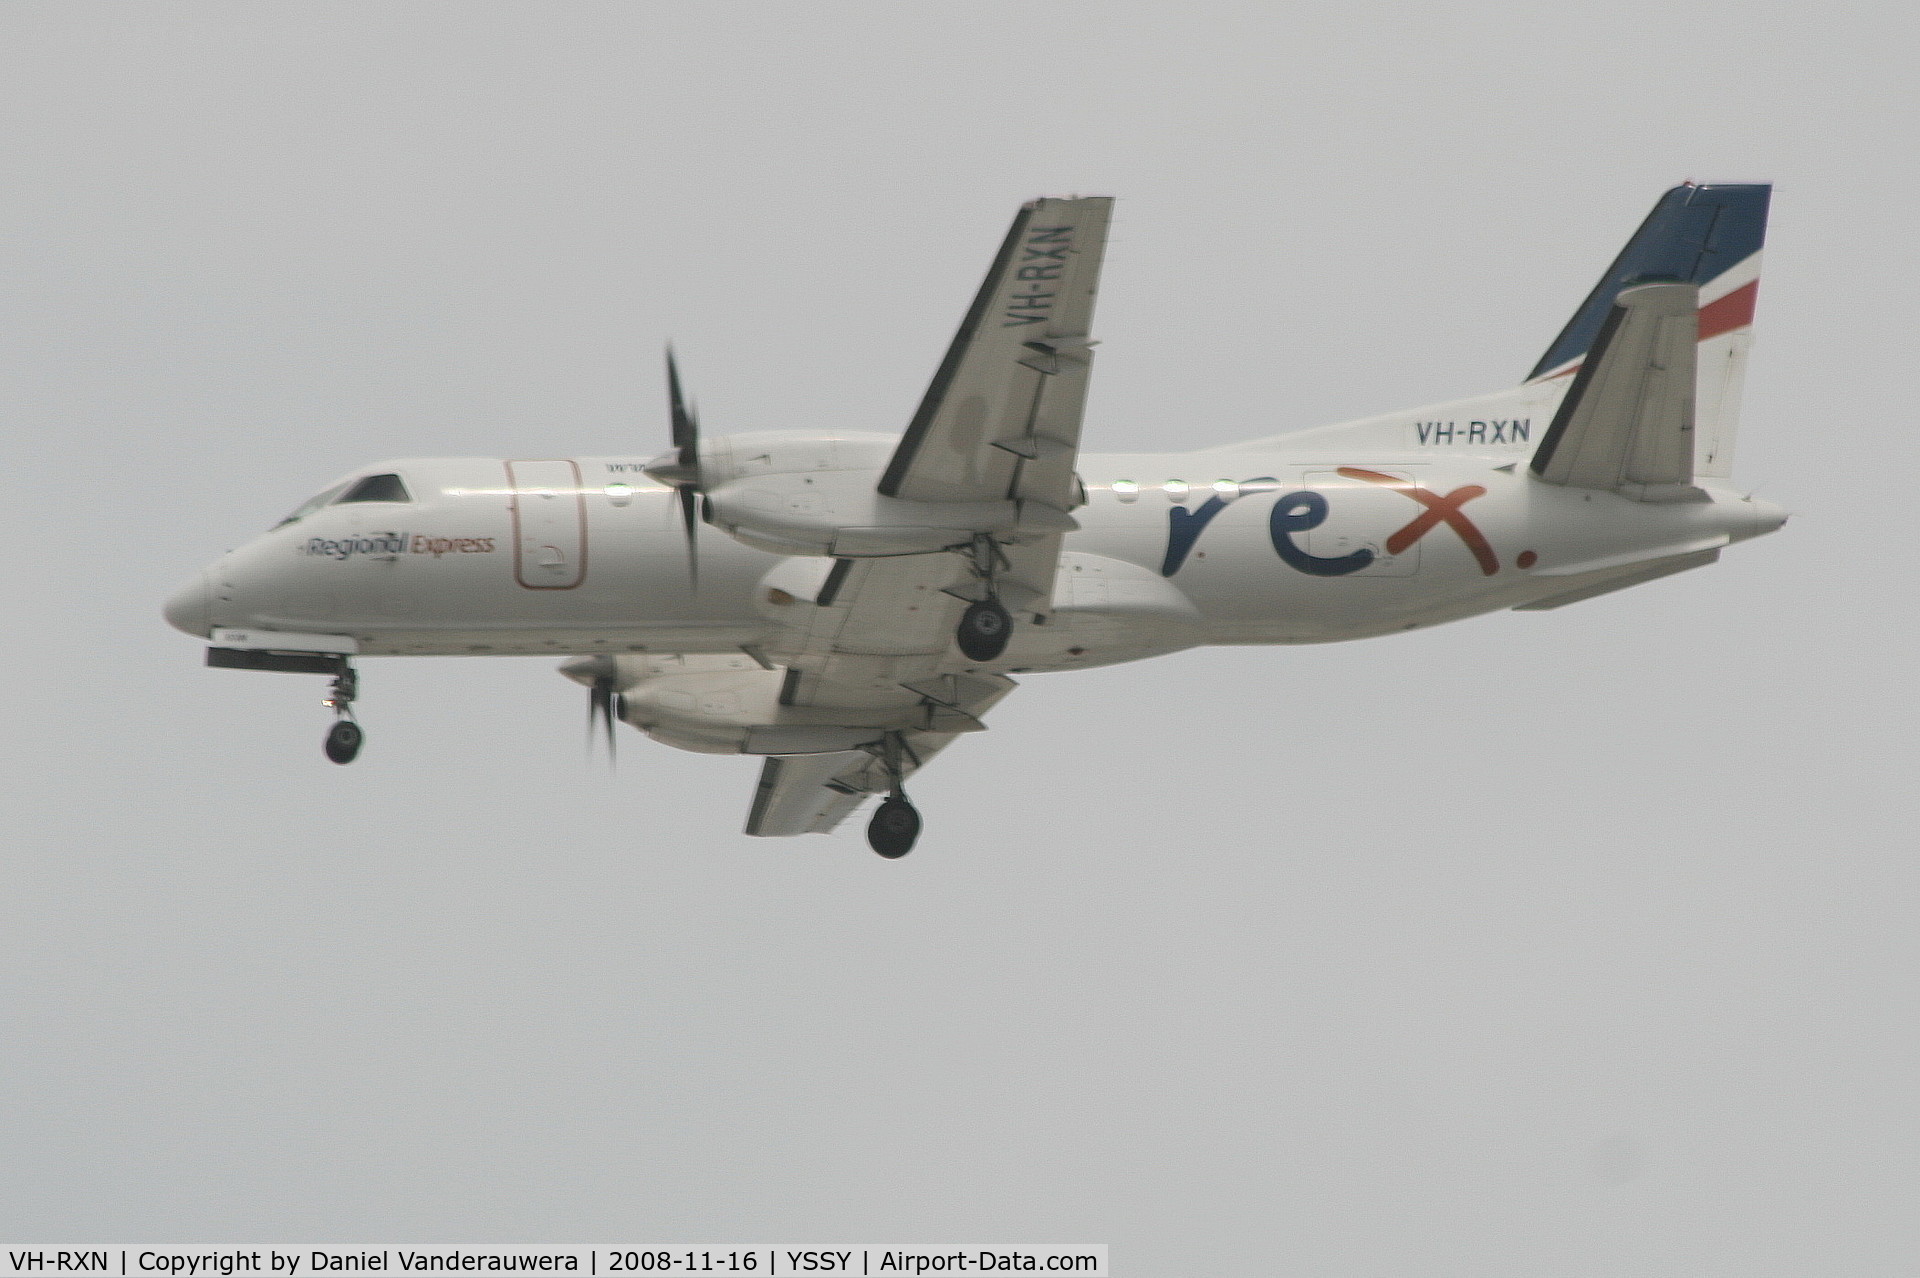 VH-RXN, 1991 Saab 340B C/N 340B-279, descending to rwy 16L